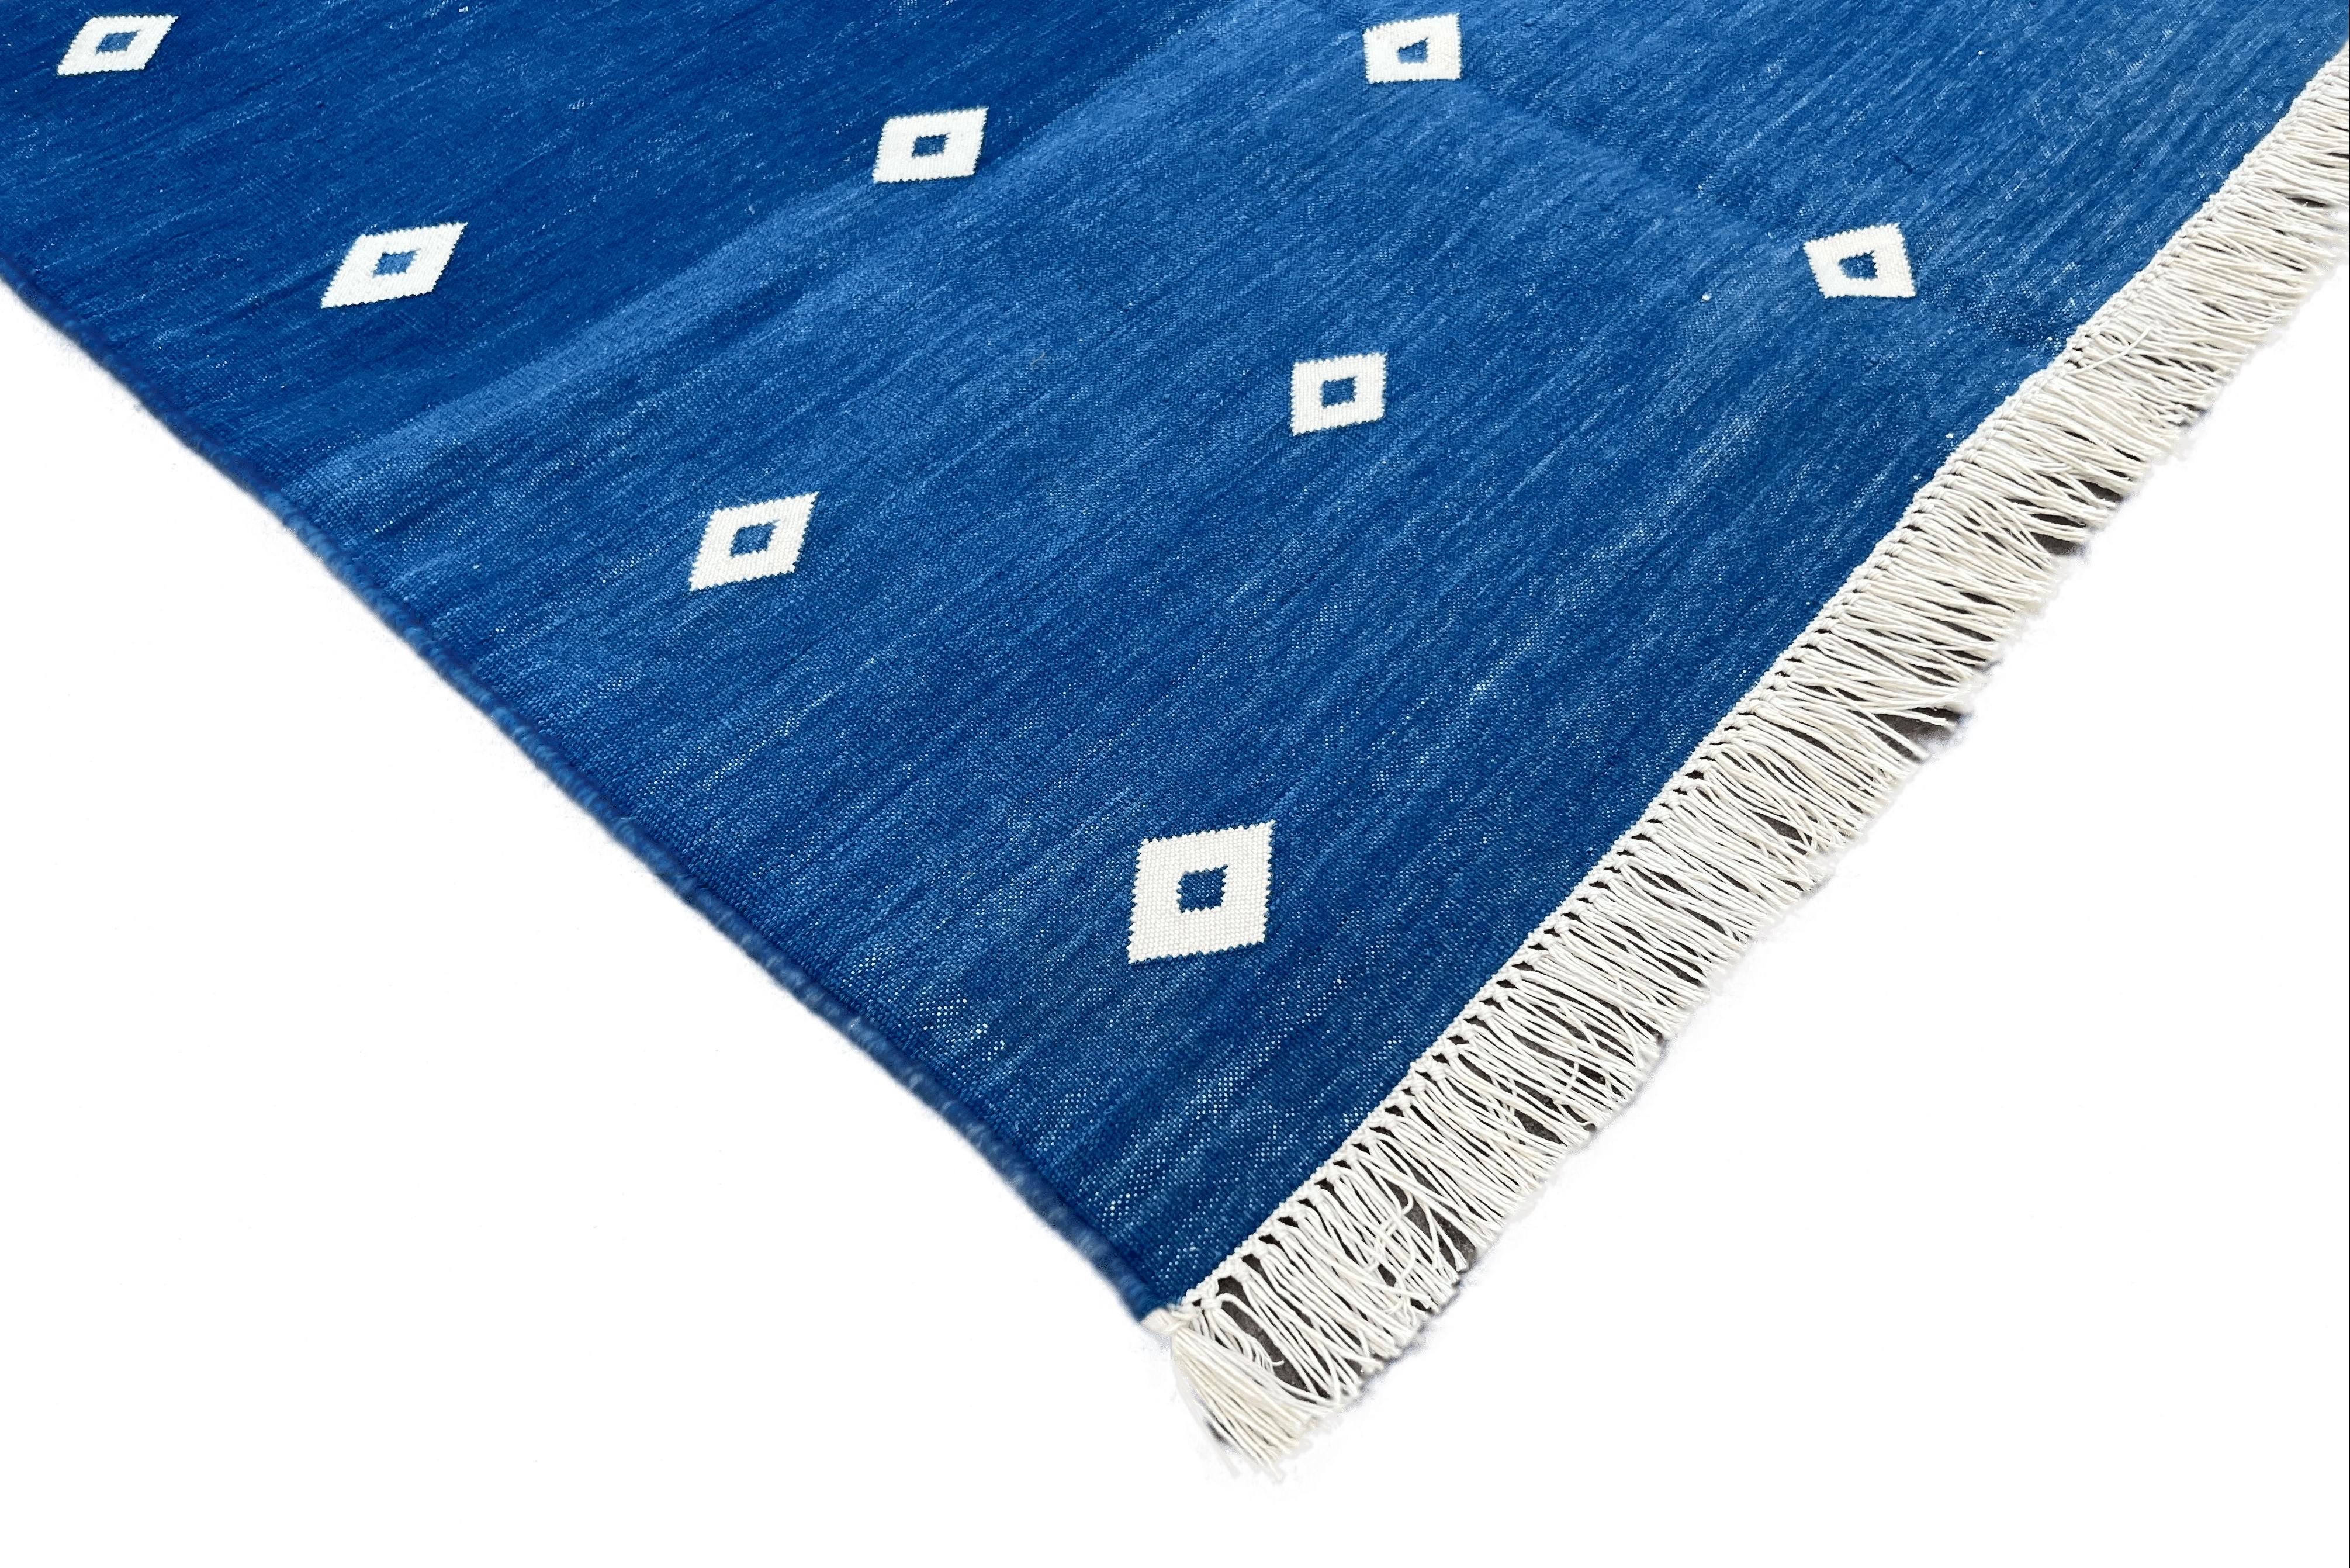 Hand-Woven Handmade Cotton Area Flat Weave Runner, 3x10 Blue, White Diamond Indian Dhurrie For Sale